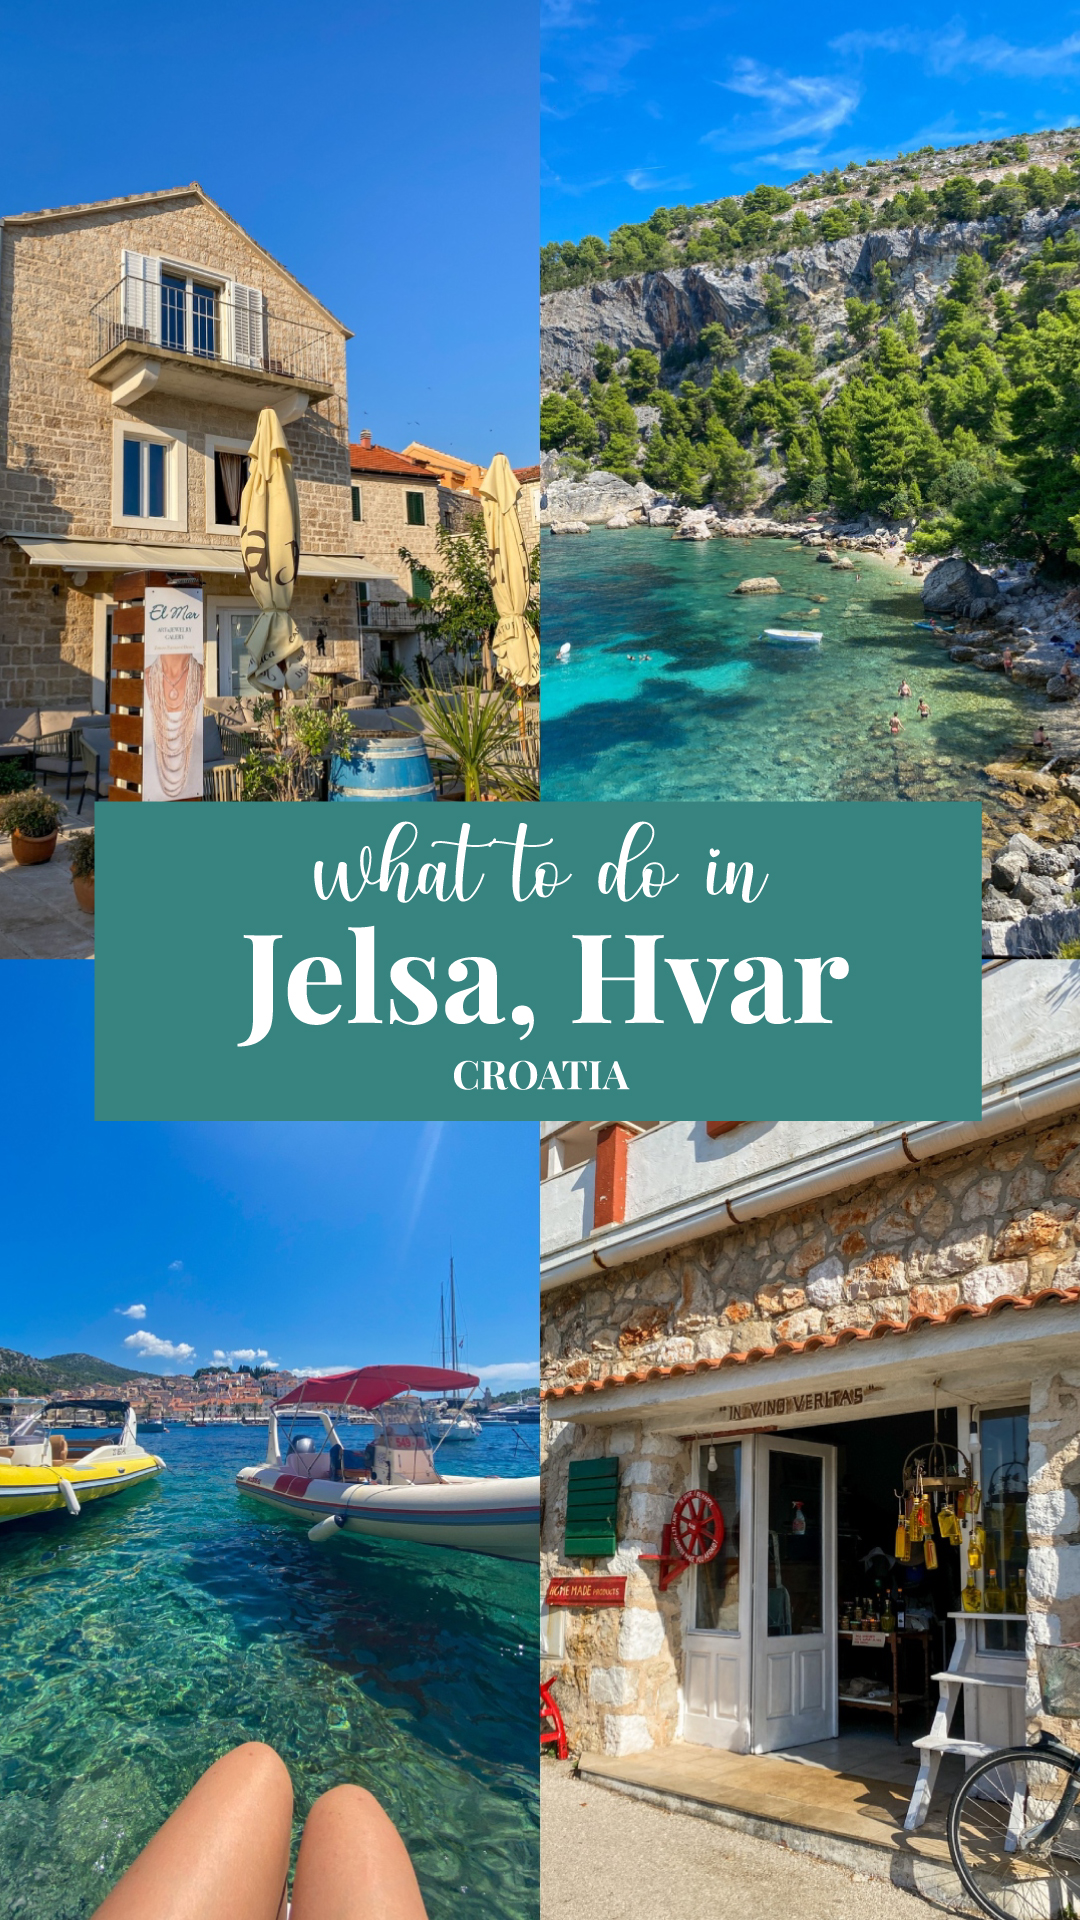 What to do in Jelsa, Hvar in Croatia